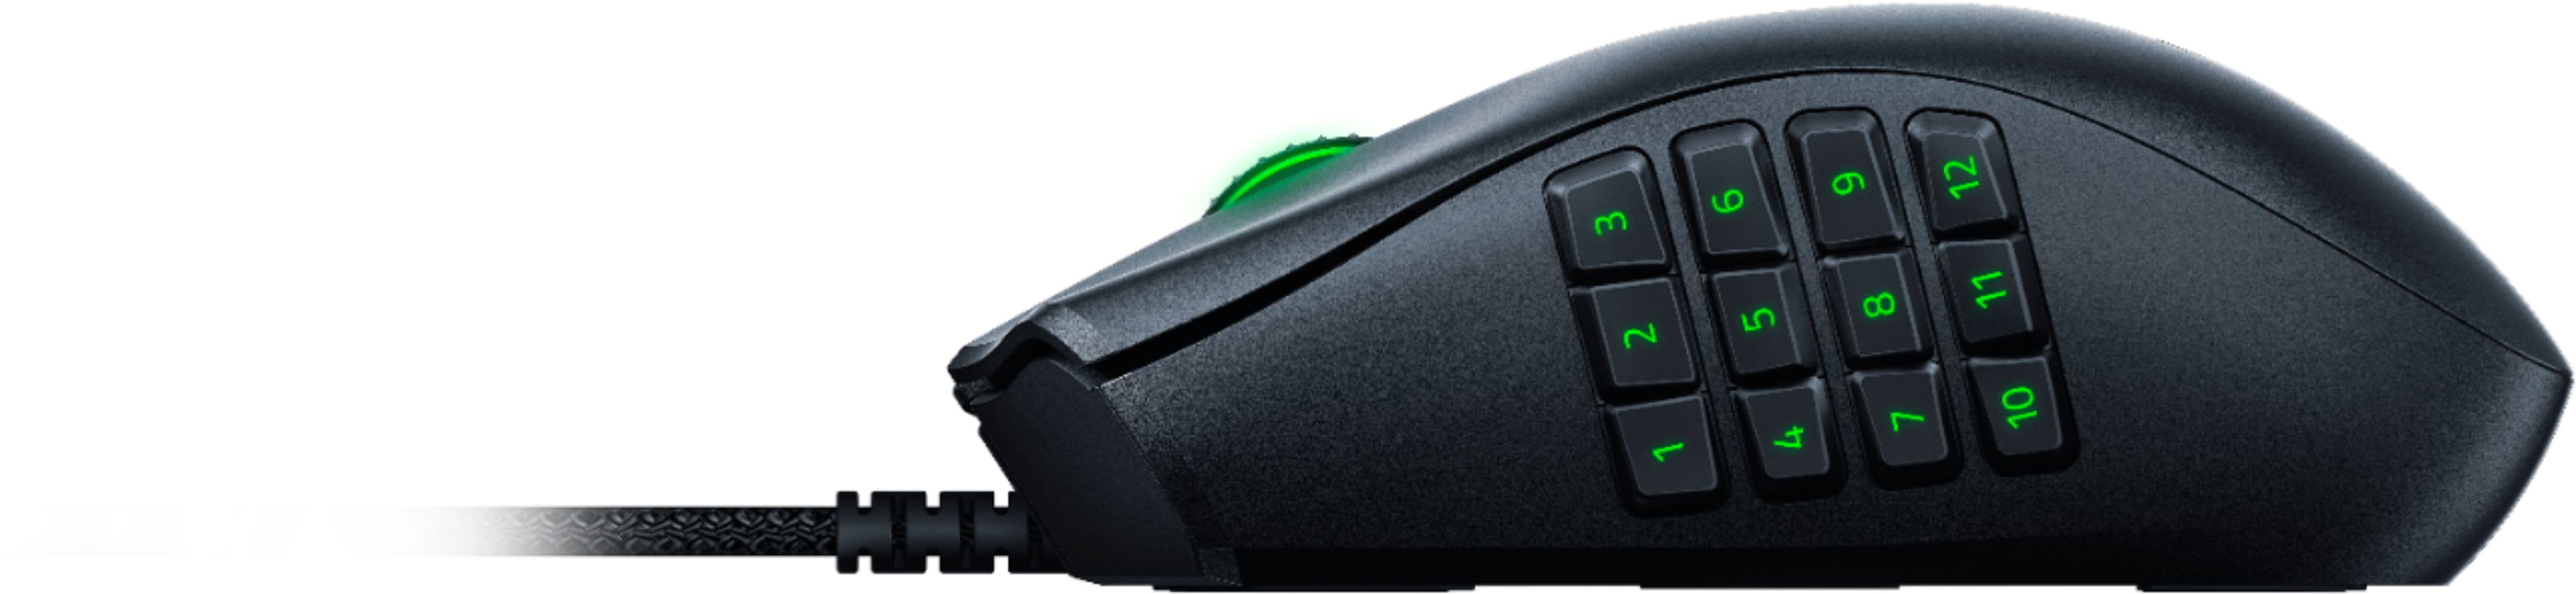 Best Buy: Razer Naga Chroma USB MMO Gaming Mouse Black RZ01